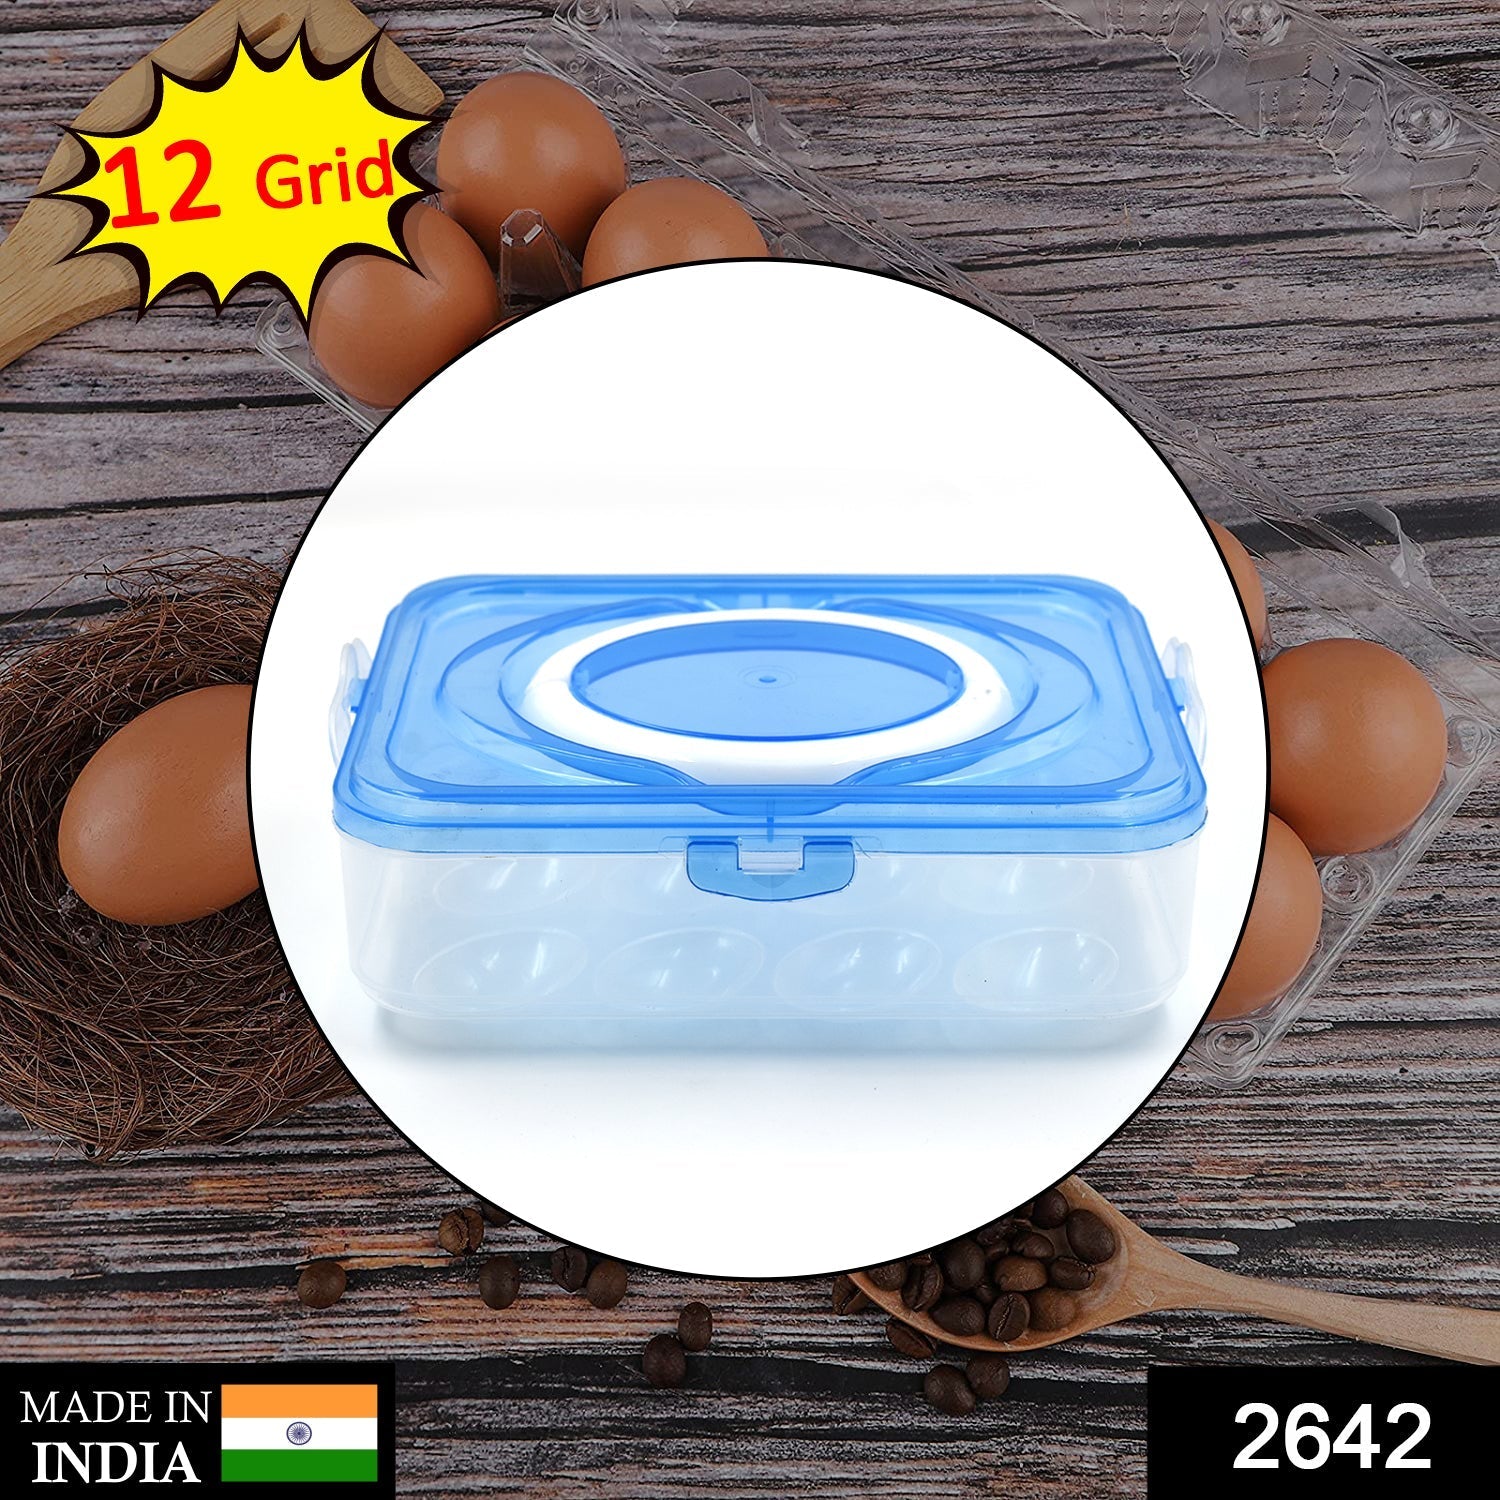 2642 Plastic Kitchen Refrigerator Egg Storage 12 Grid 1 Layer Egg Container